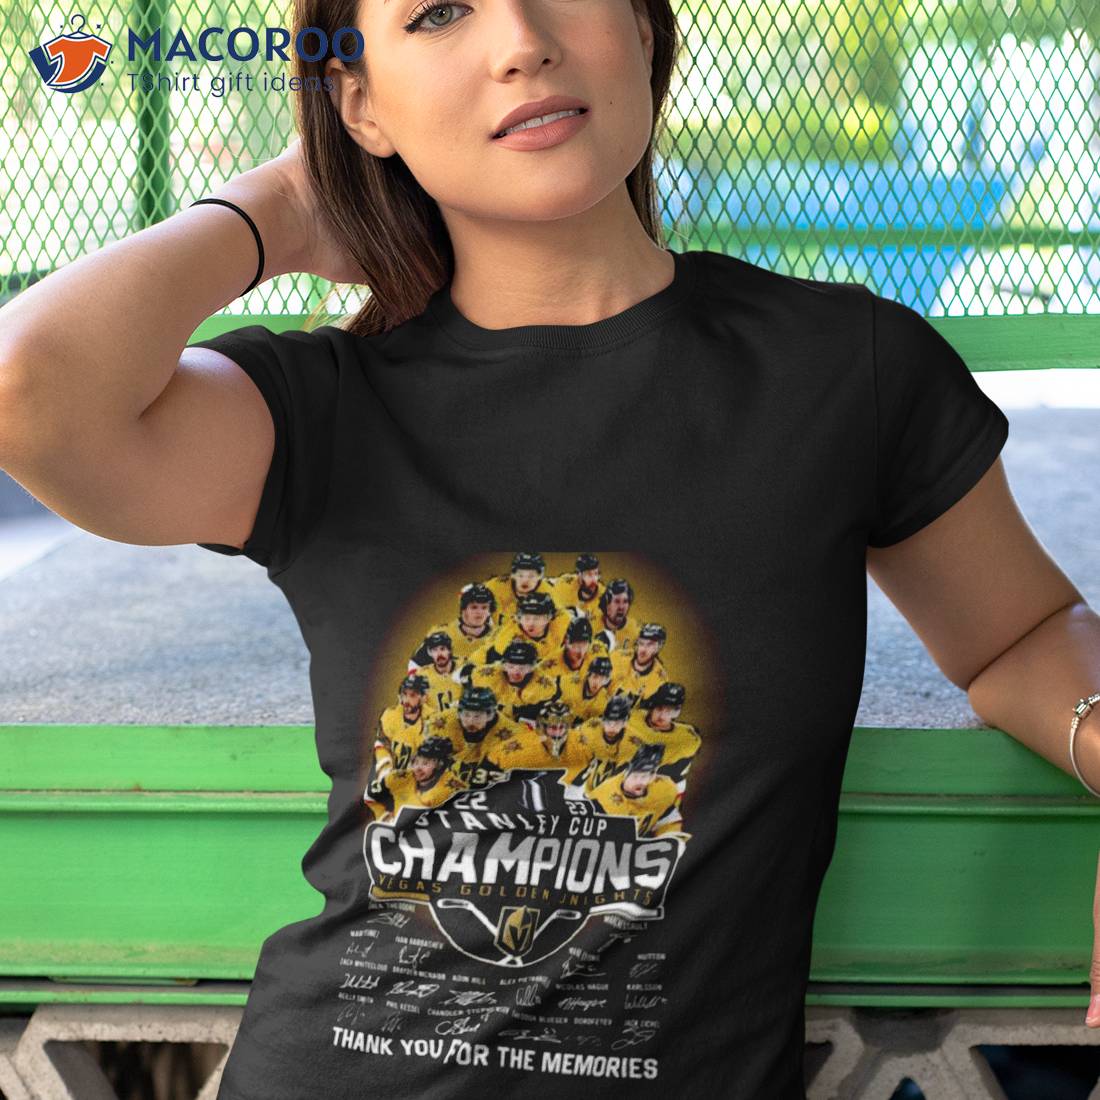 Men's Vegas Golden Knights Fanatics Branded Heather Gray 2023 Stanley Cup  Champions Locker Room T-Shirt